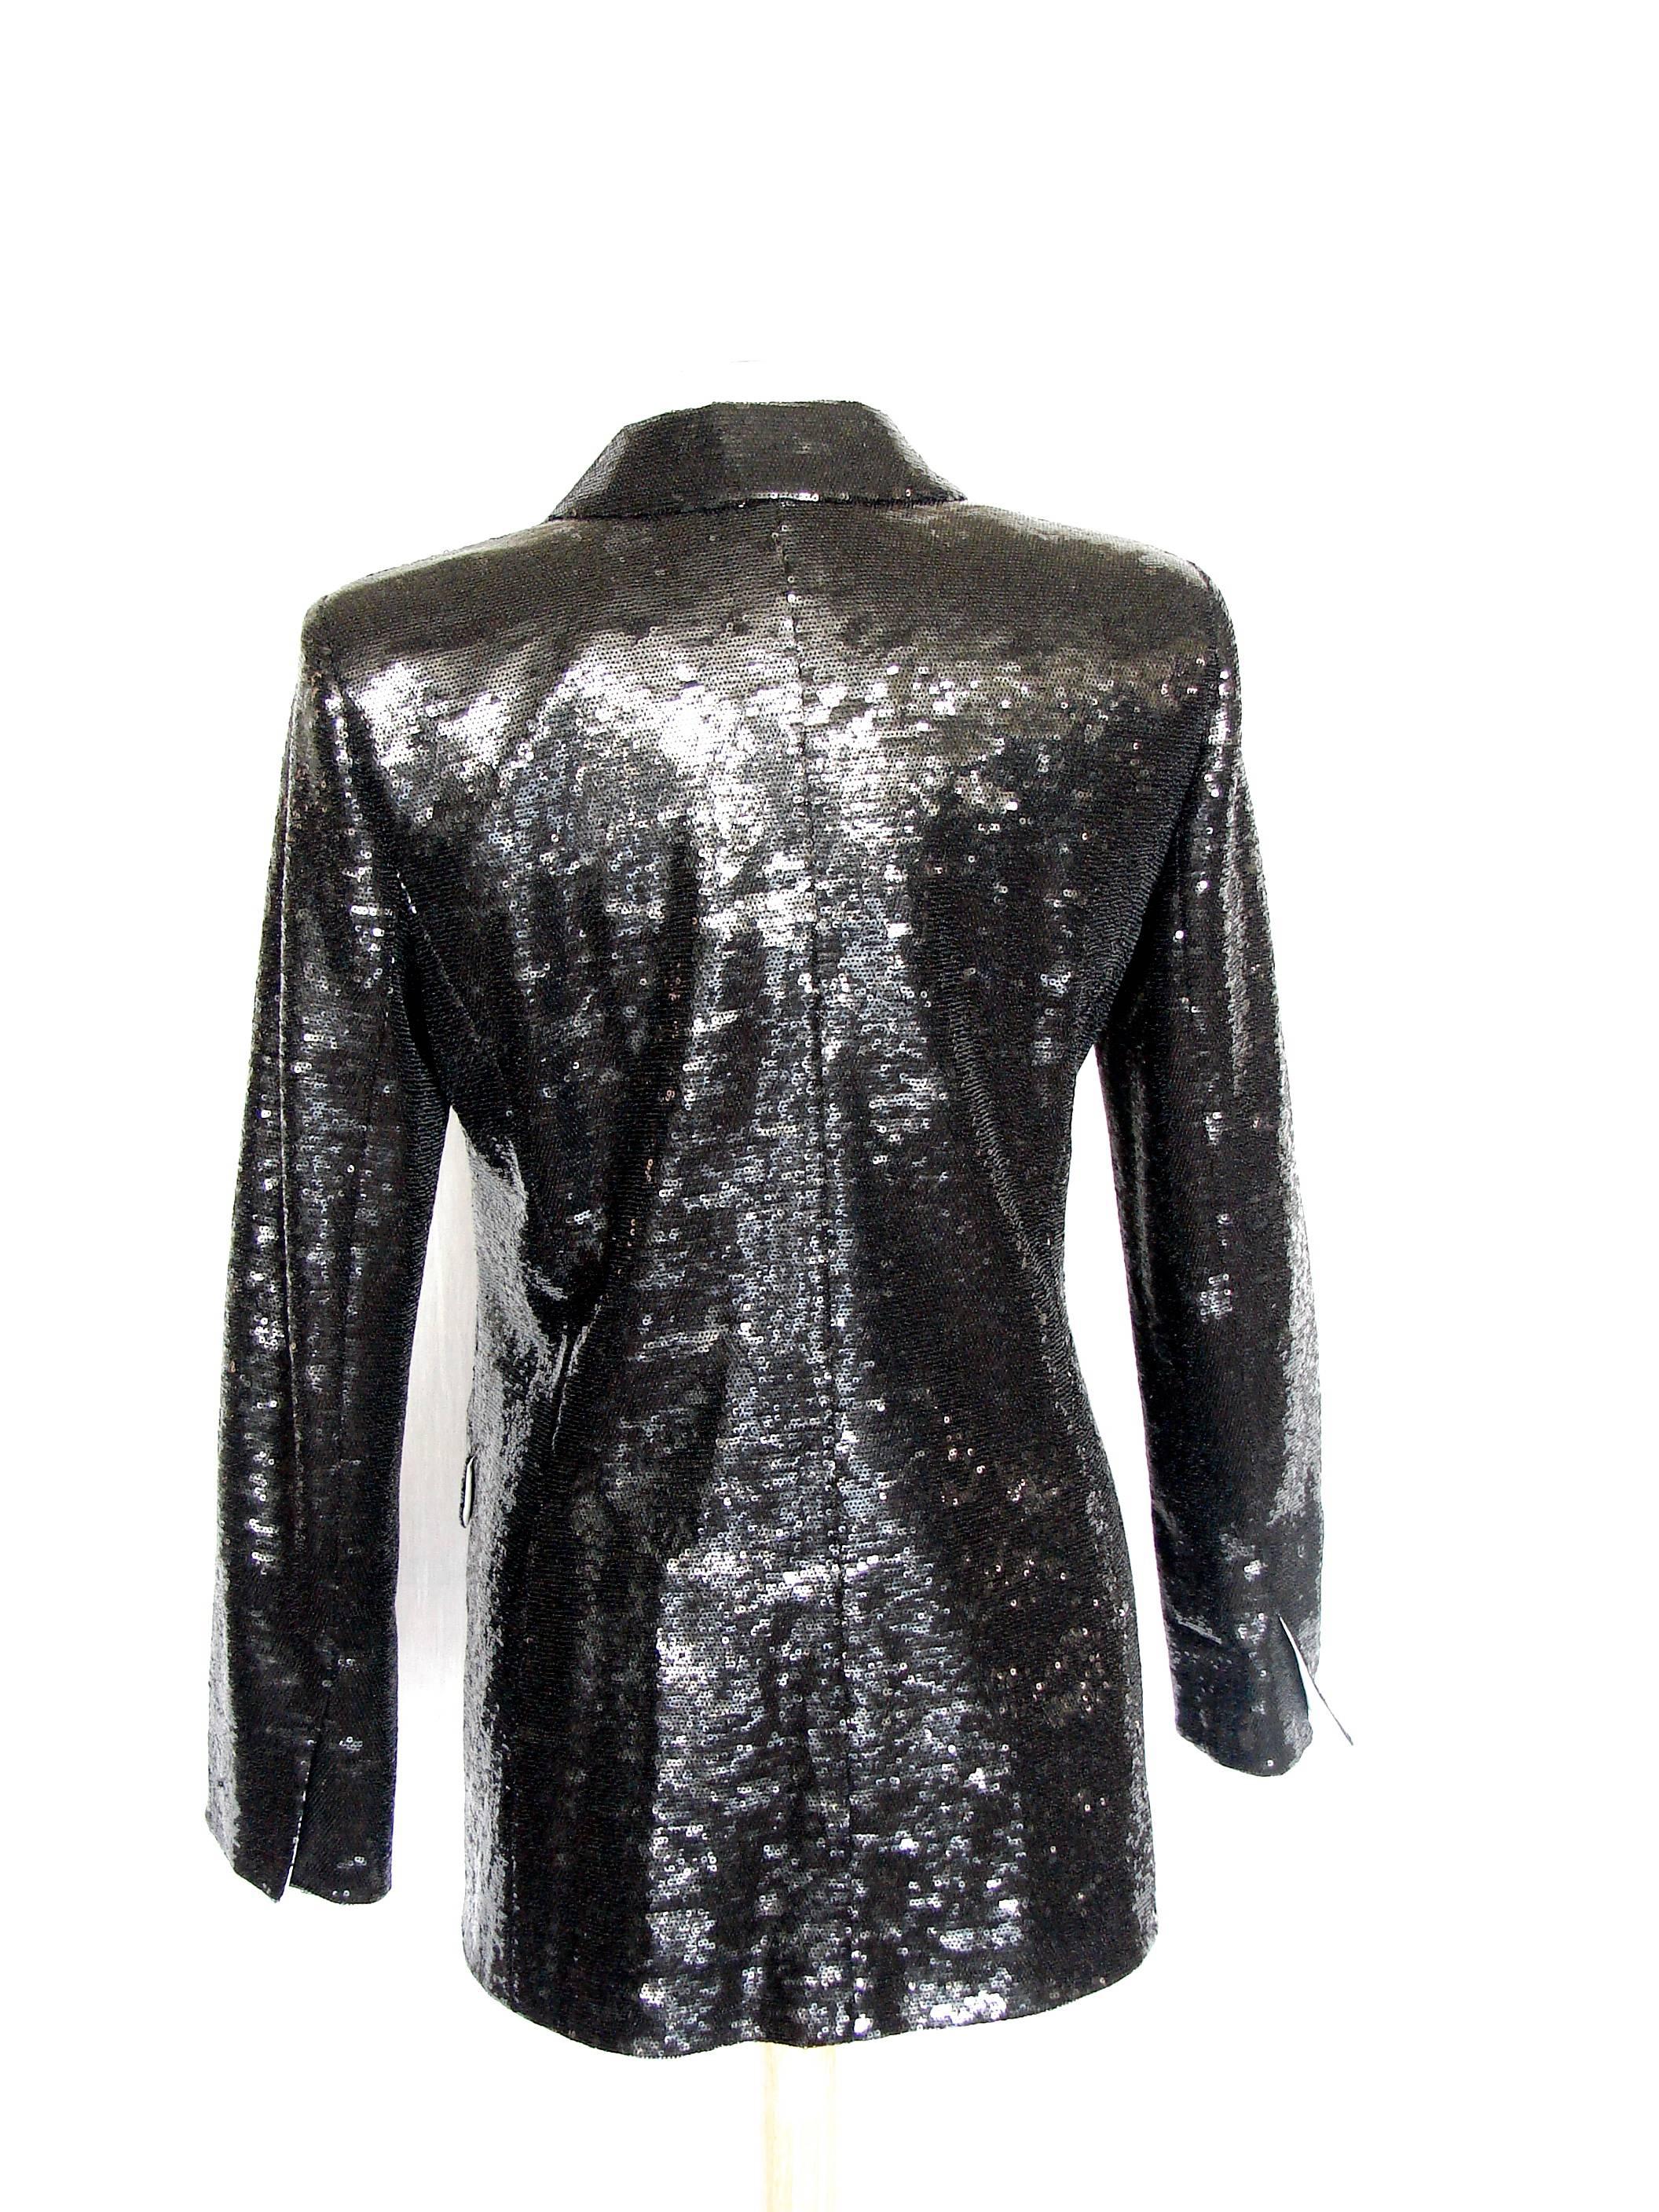 chanel black sequin jacket